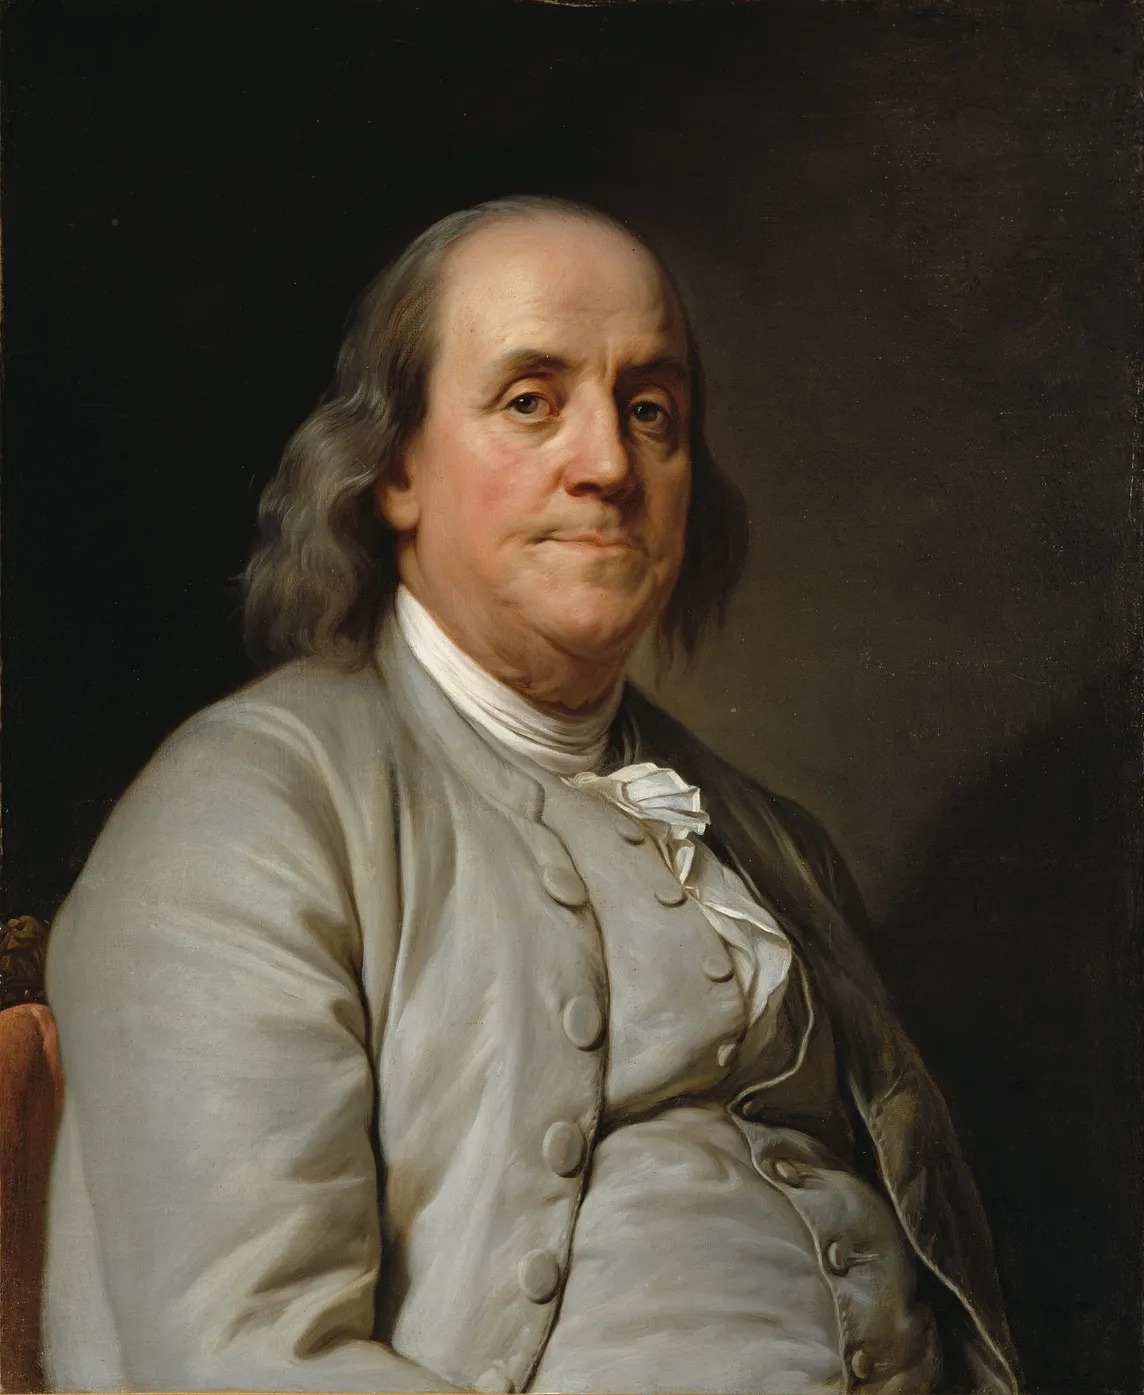 History of Ben Franklin